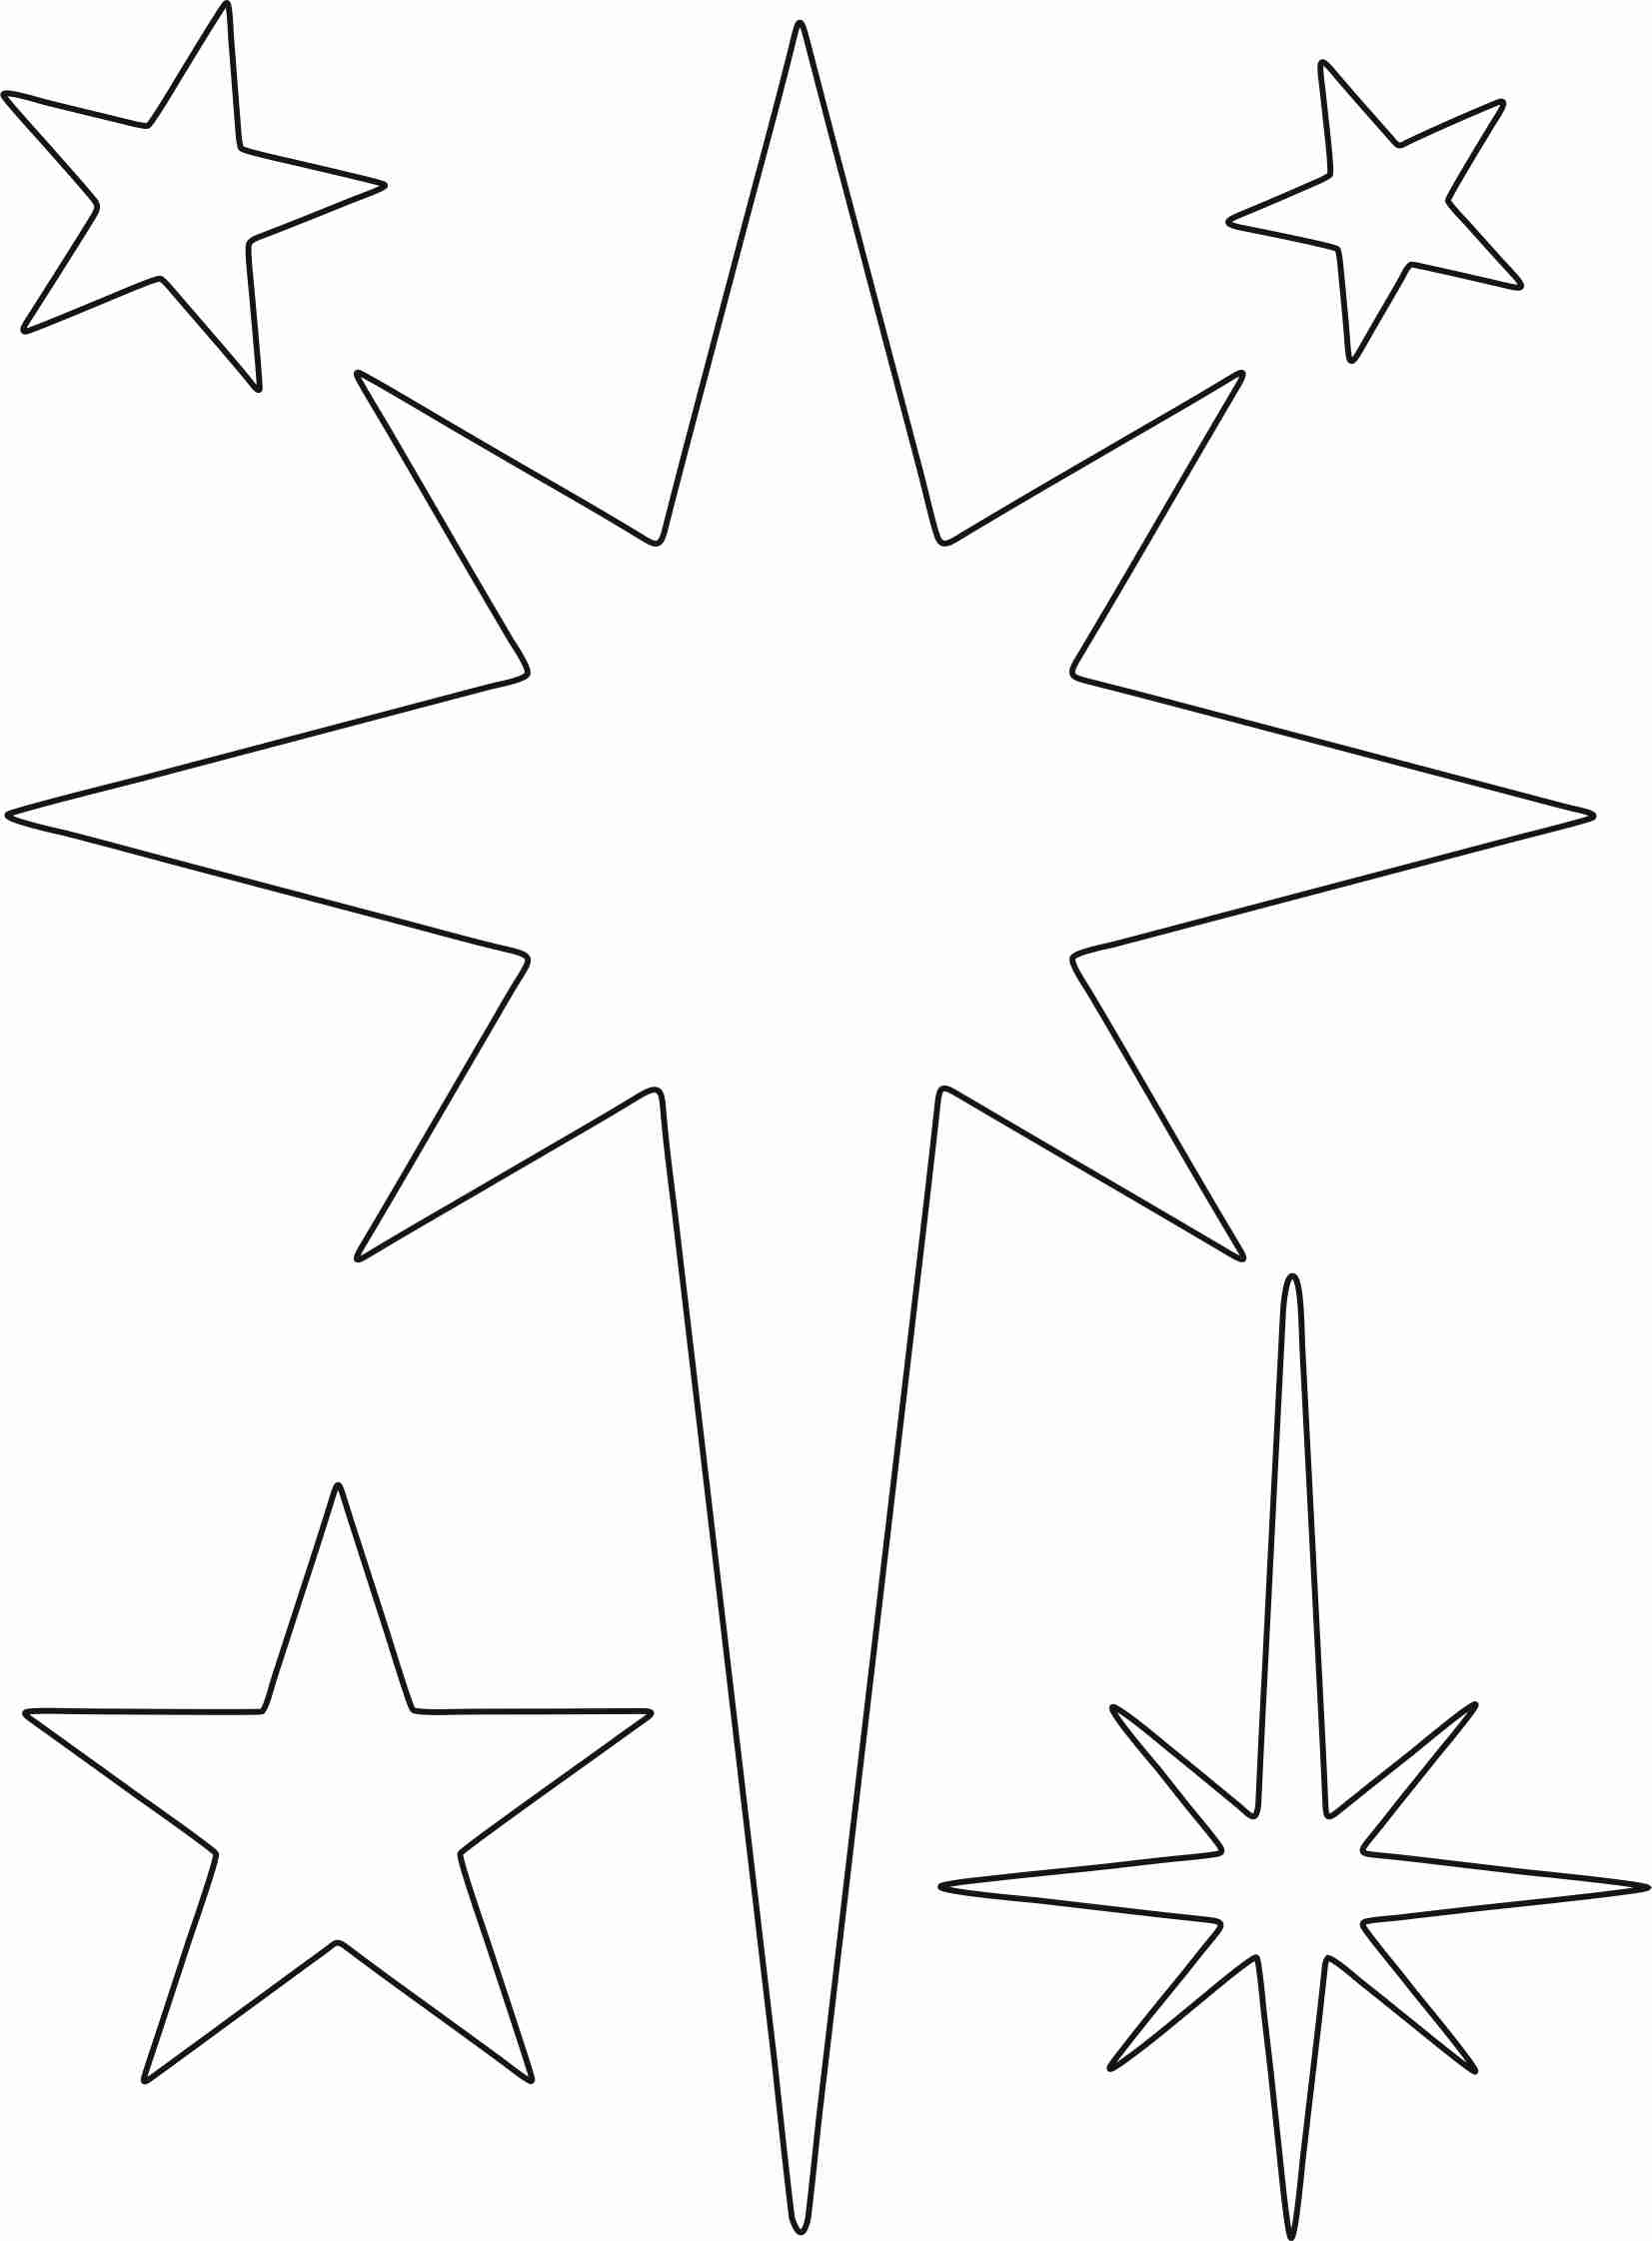 Star of Wonder - MajeMask Stencil